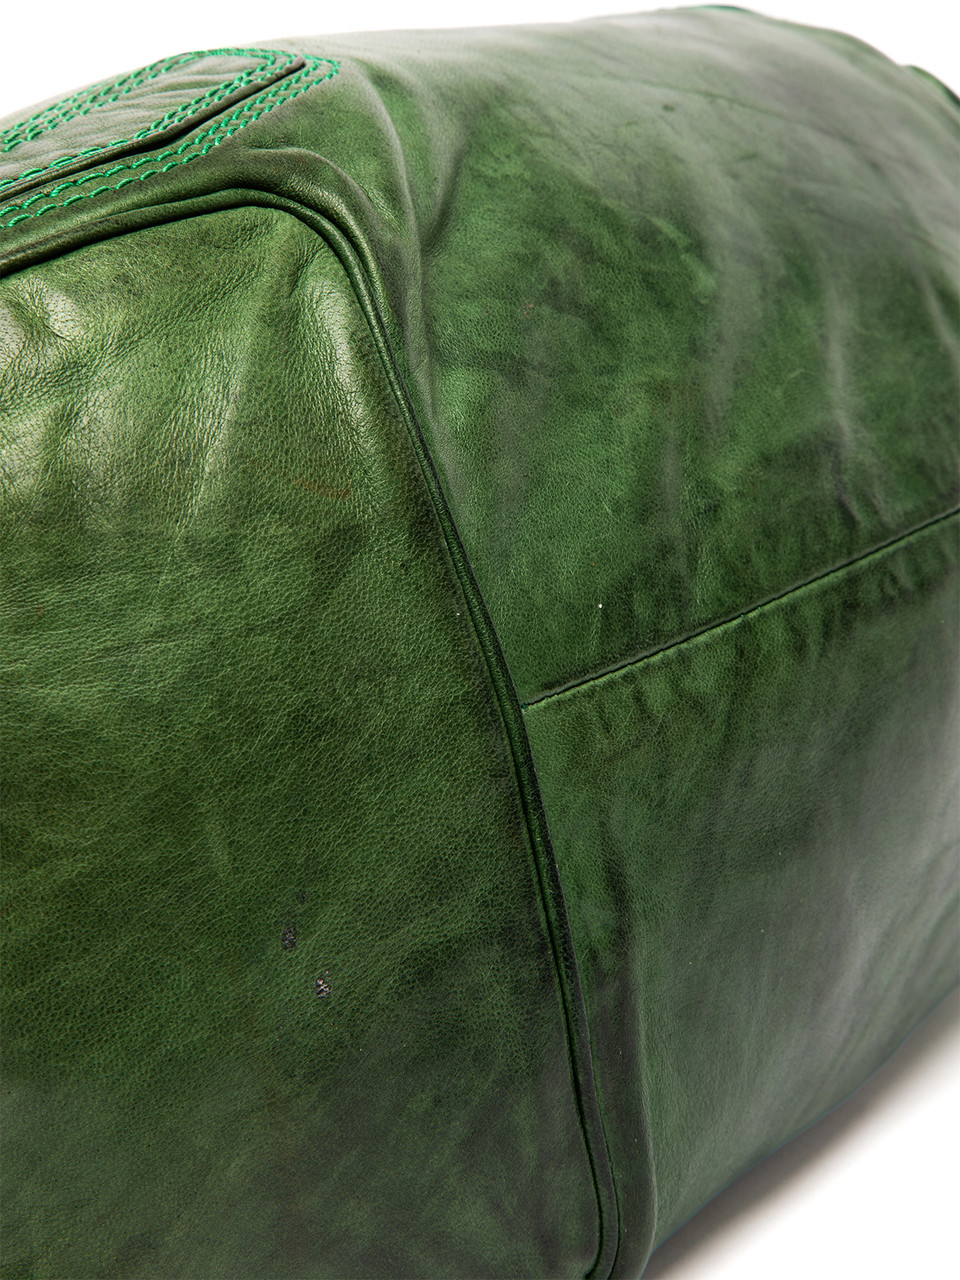 Jimmy Choo Green Leather Bucket Tote